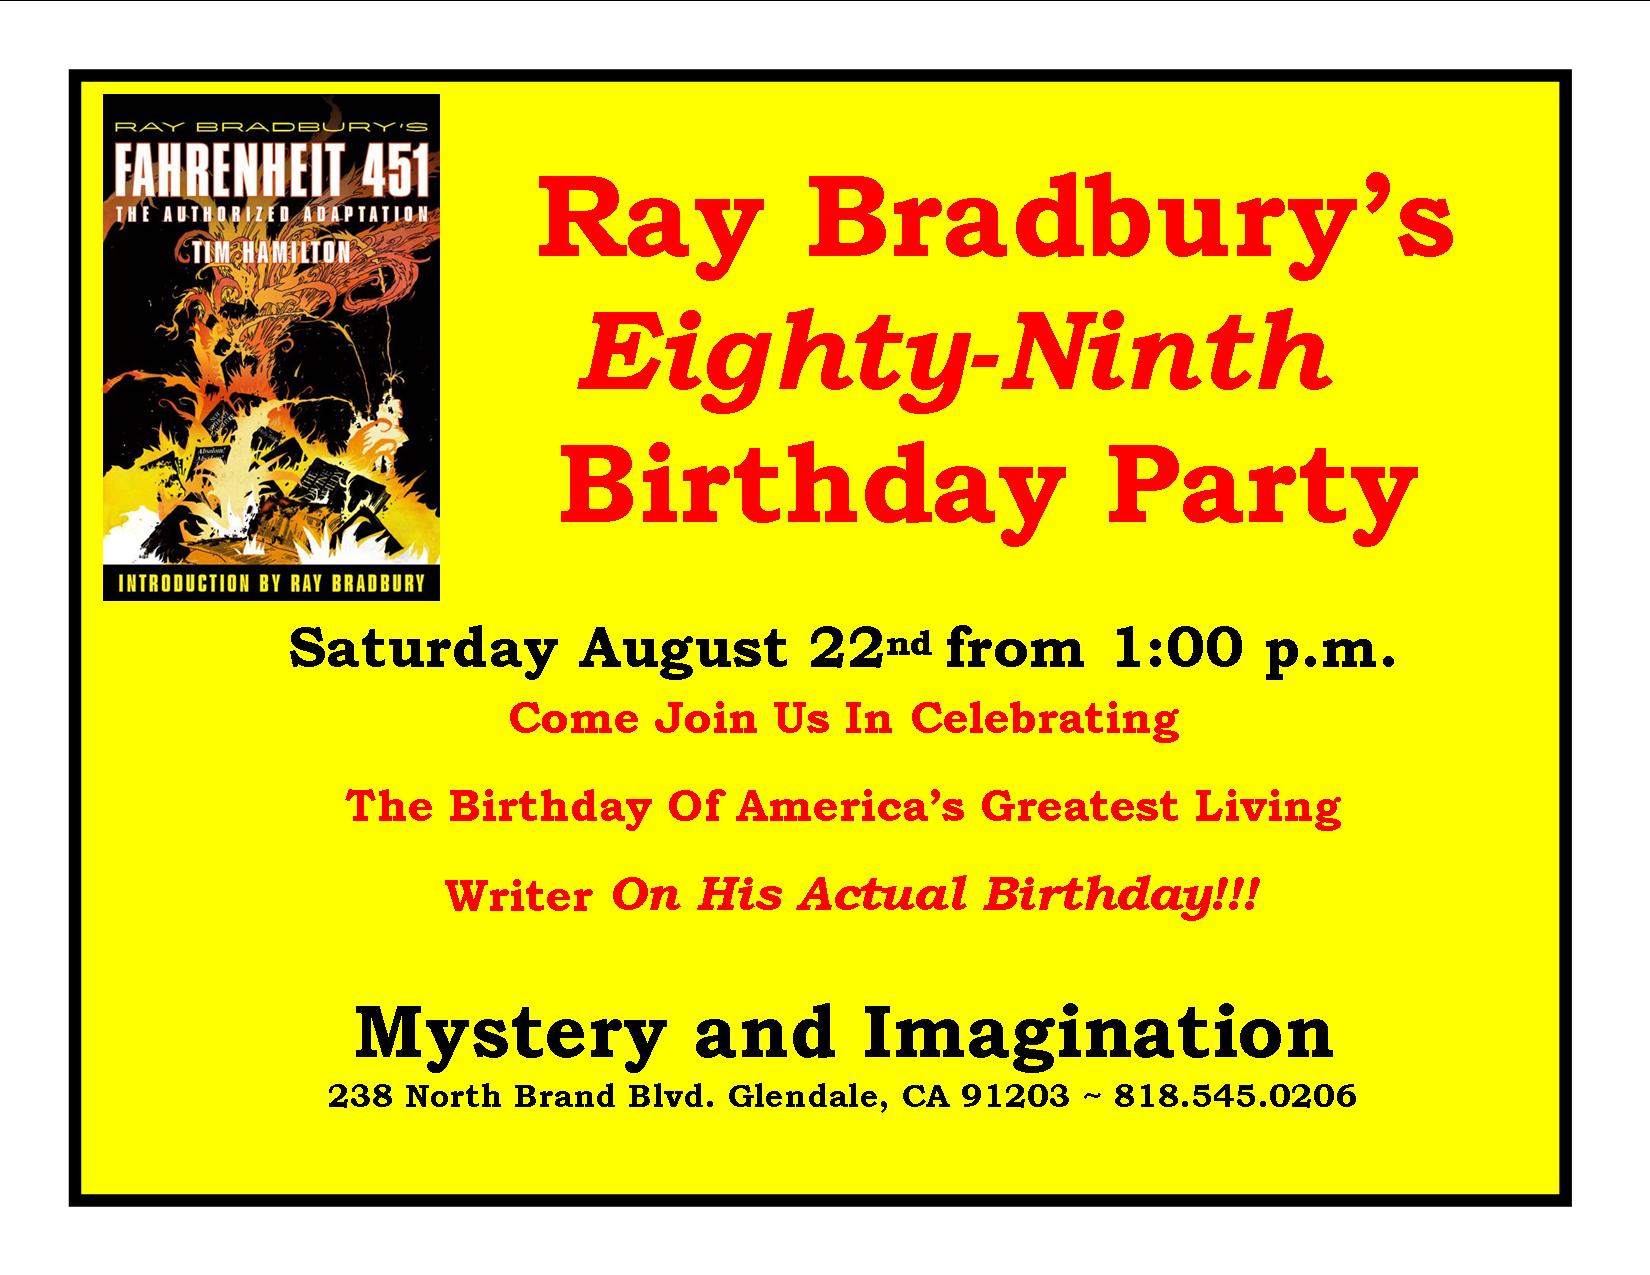 Ray Bradbury’s 89th birthday party